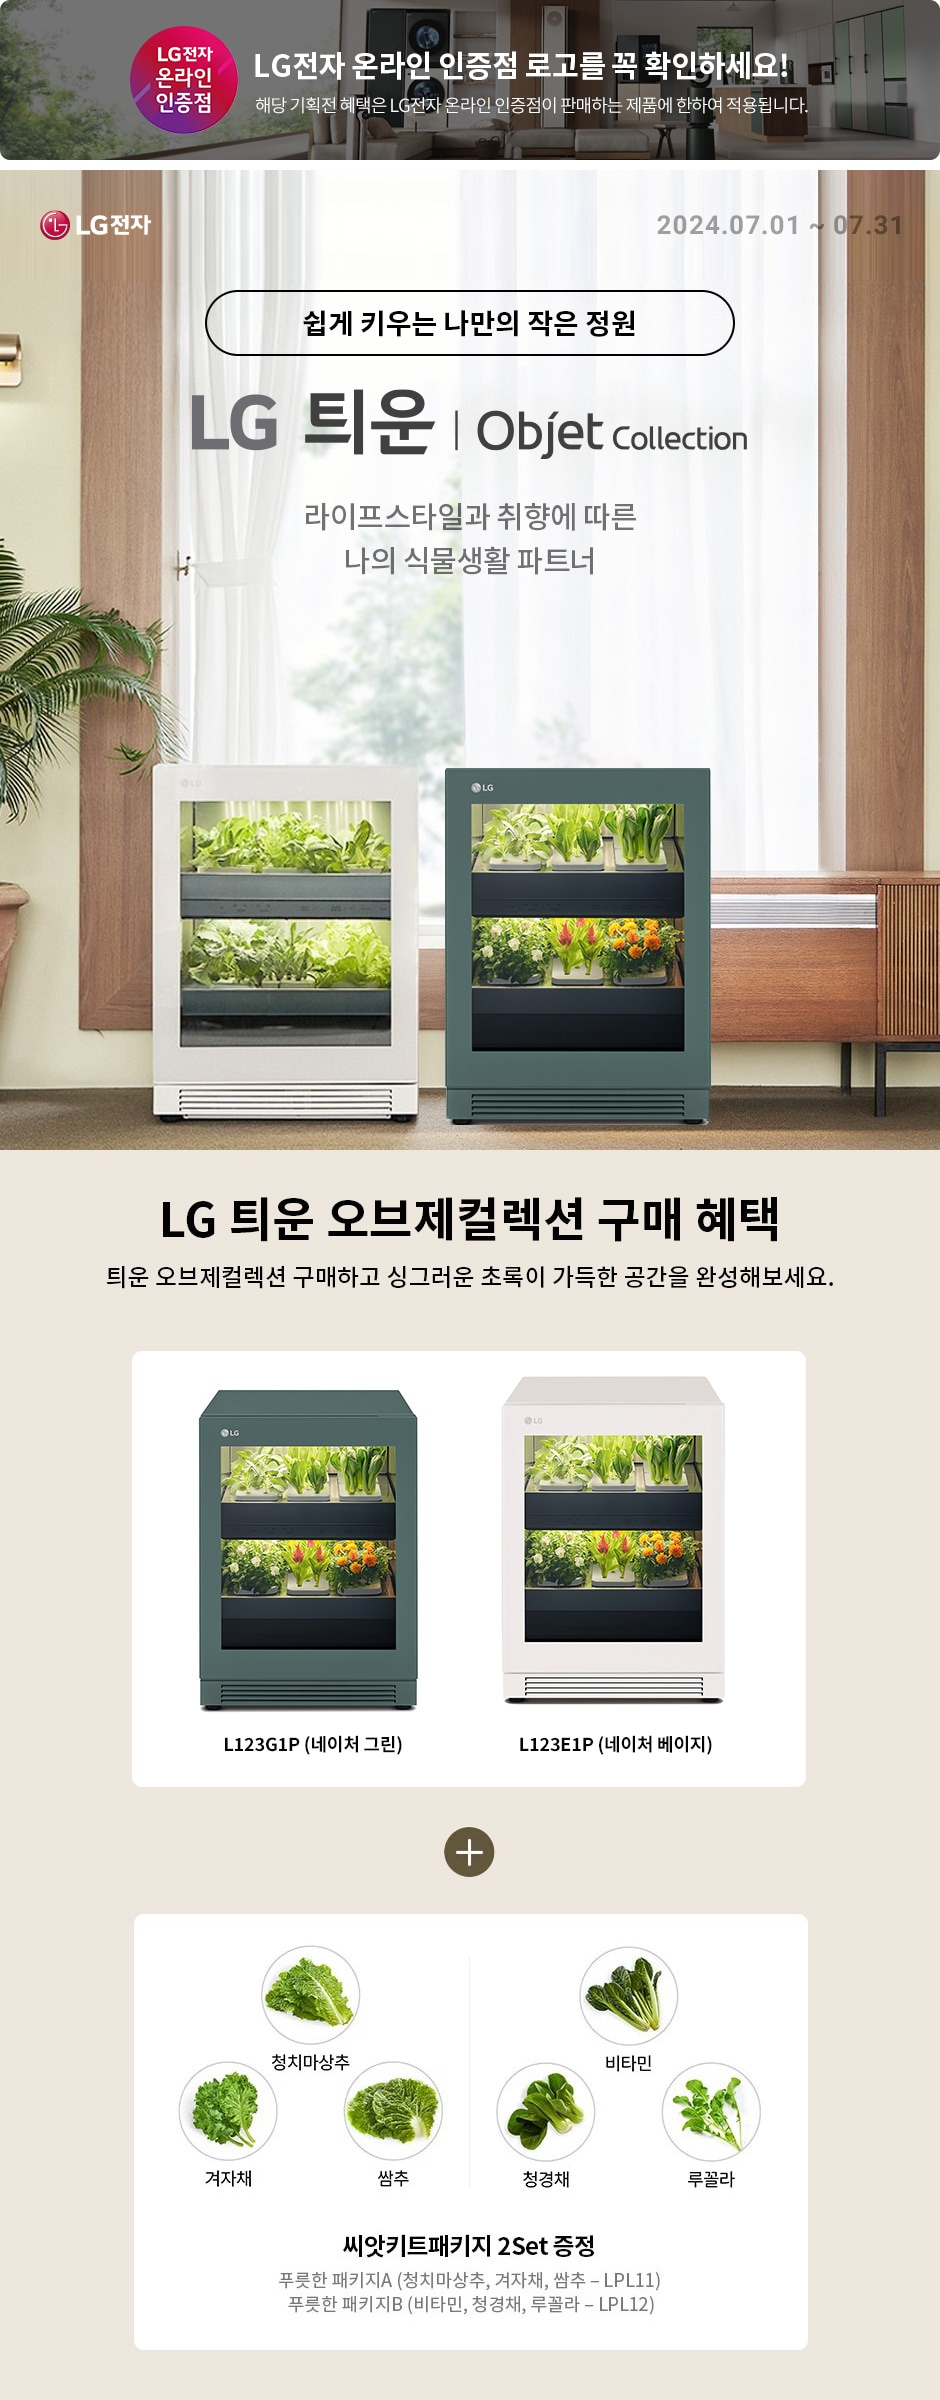 [LG전자] LG DIOS 양문형 냉장고 신모델 특가전